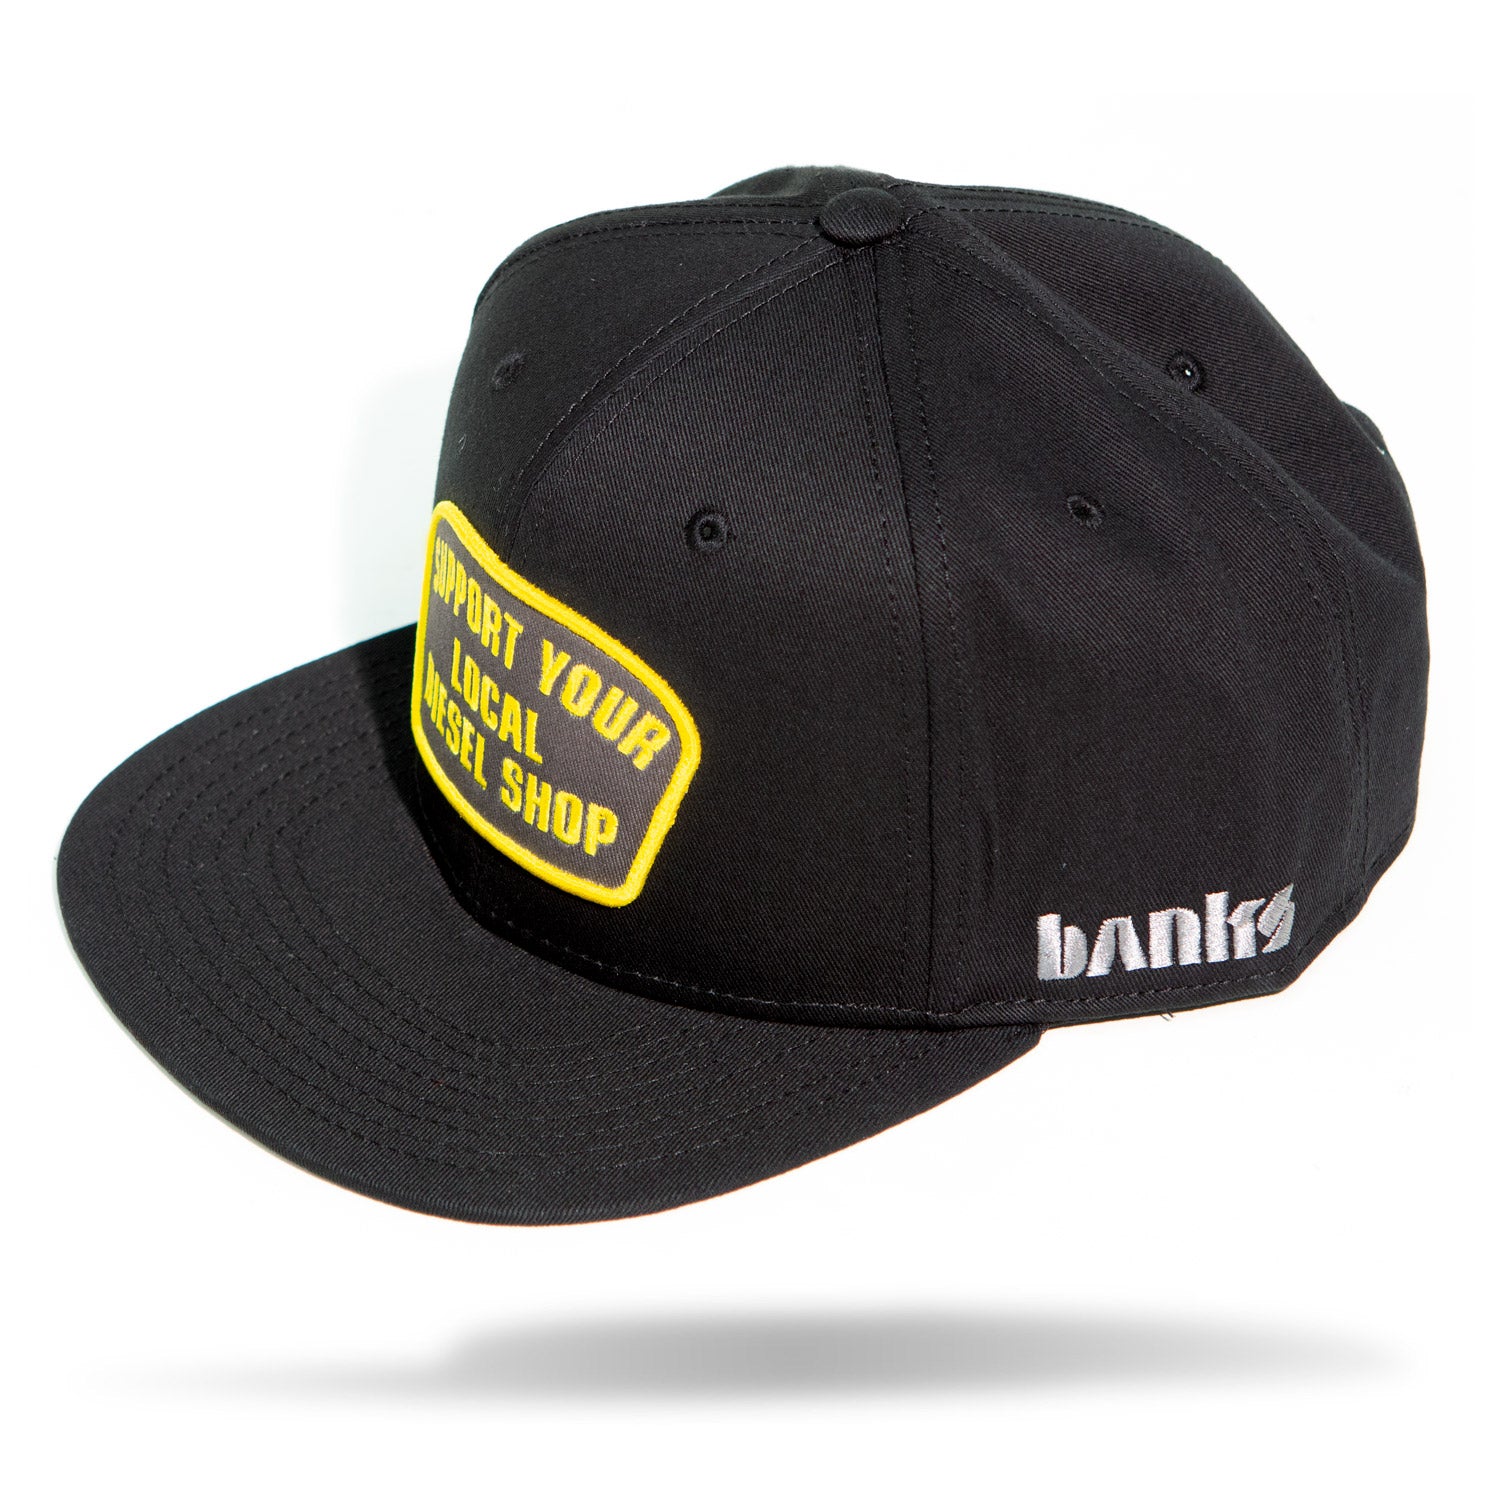 Banks hat